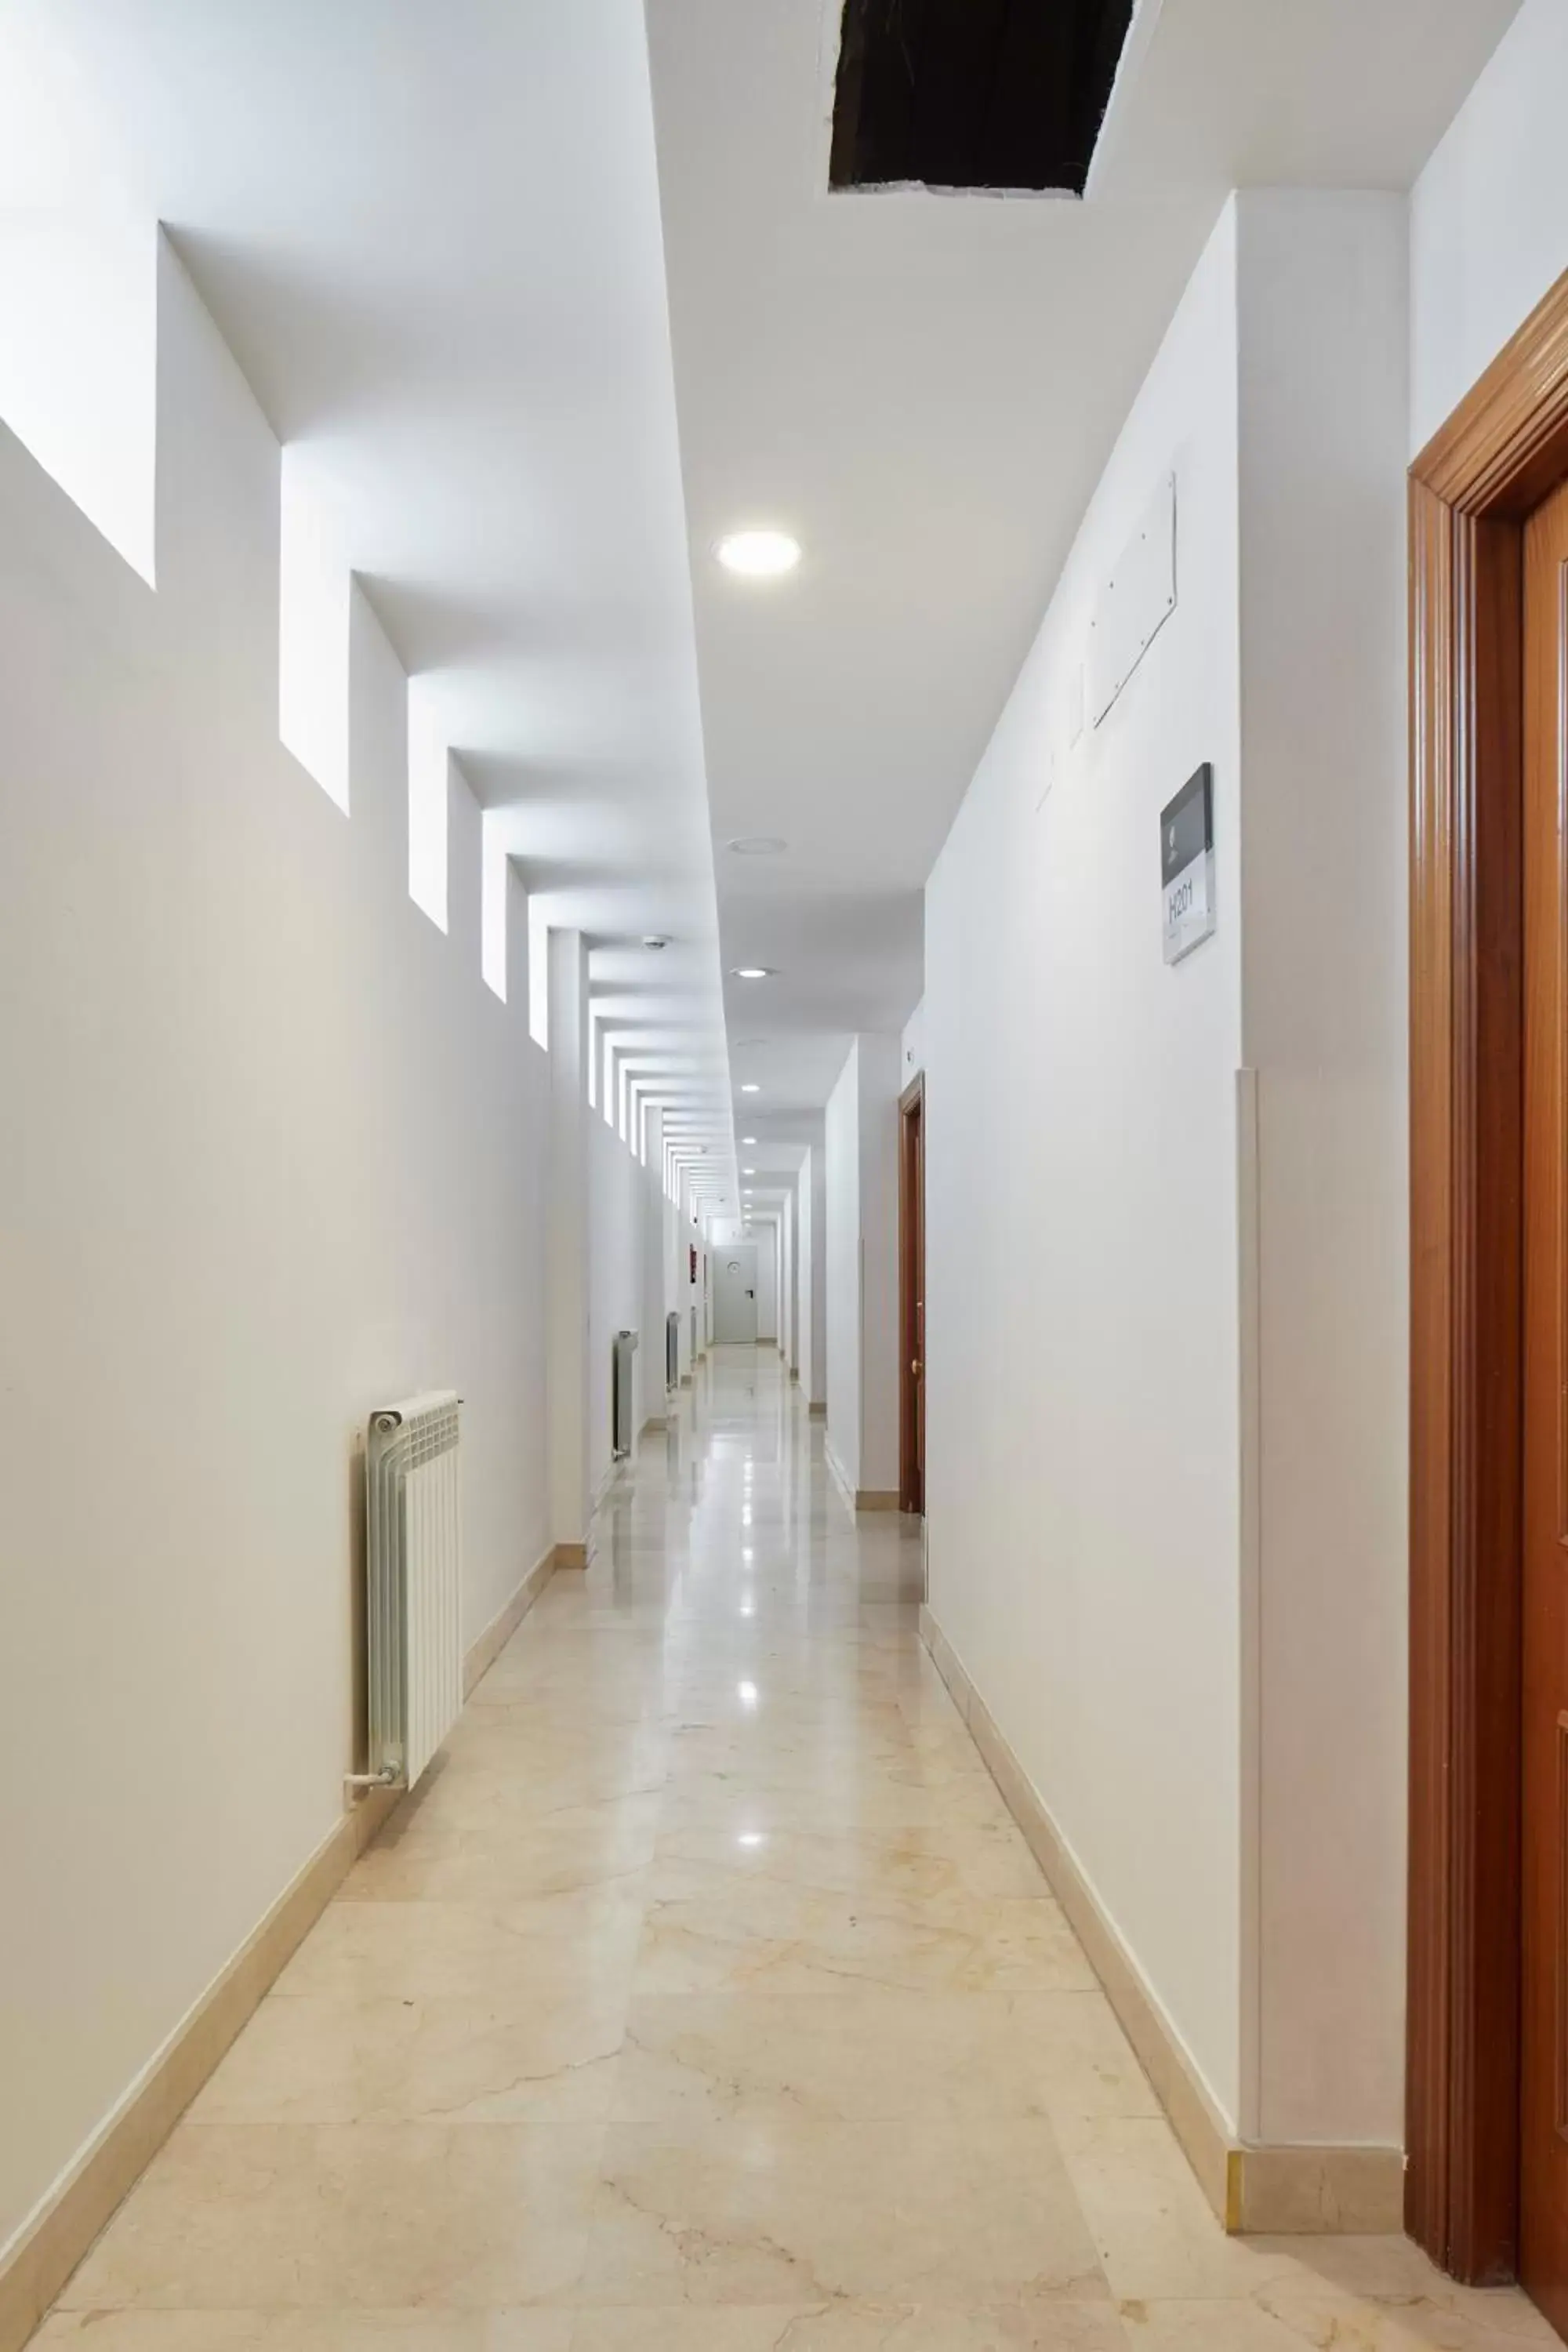 Area and facilities in Hotel Logroño Avda de Madrid 25